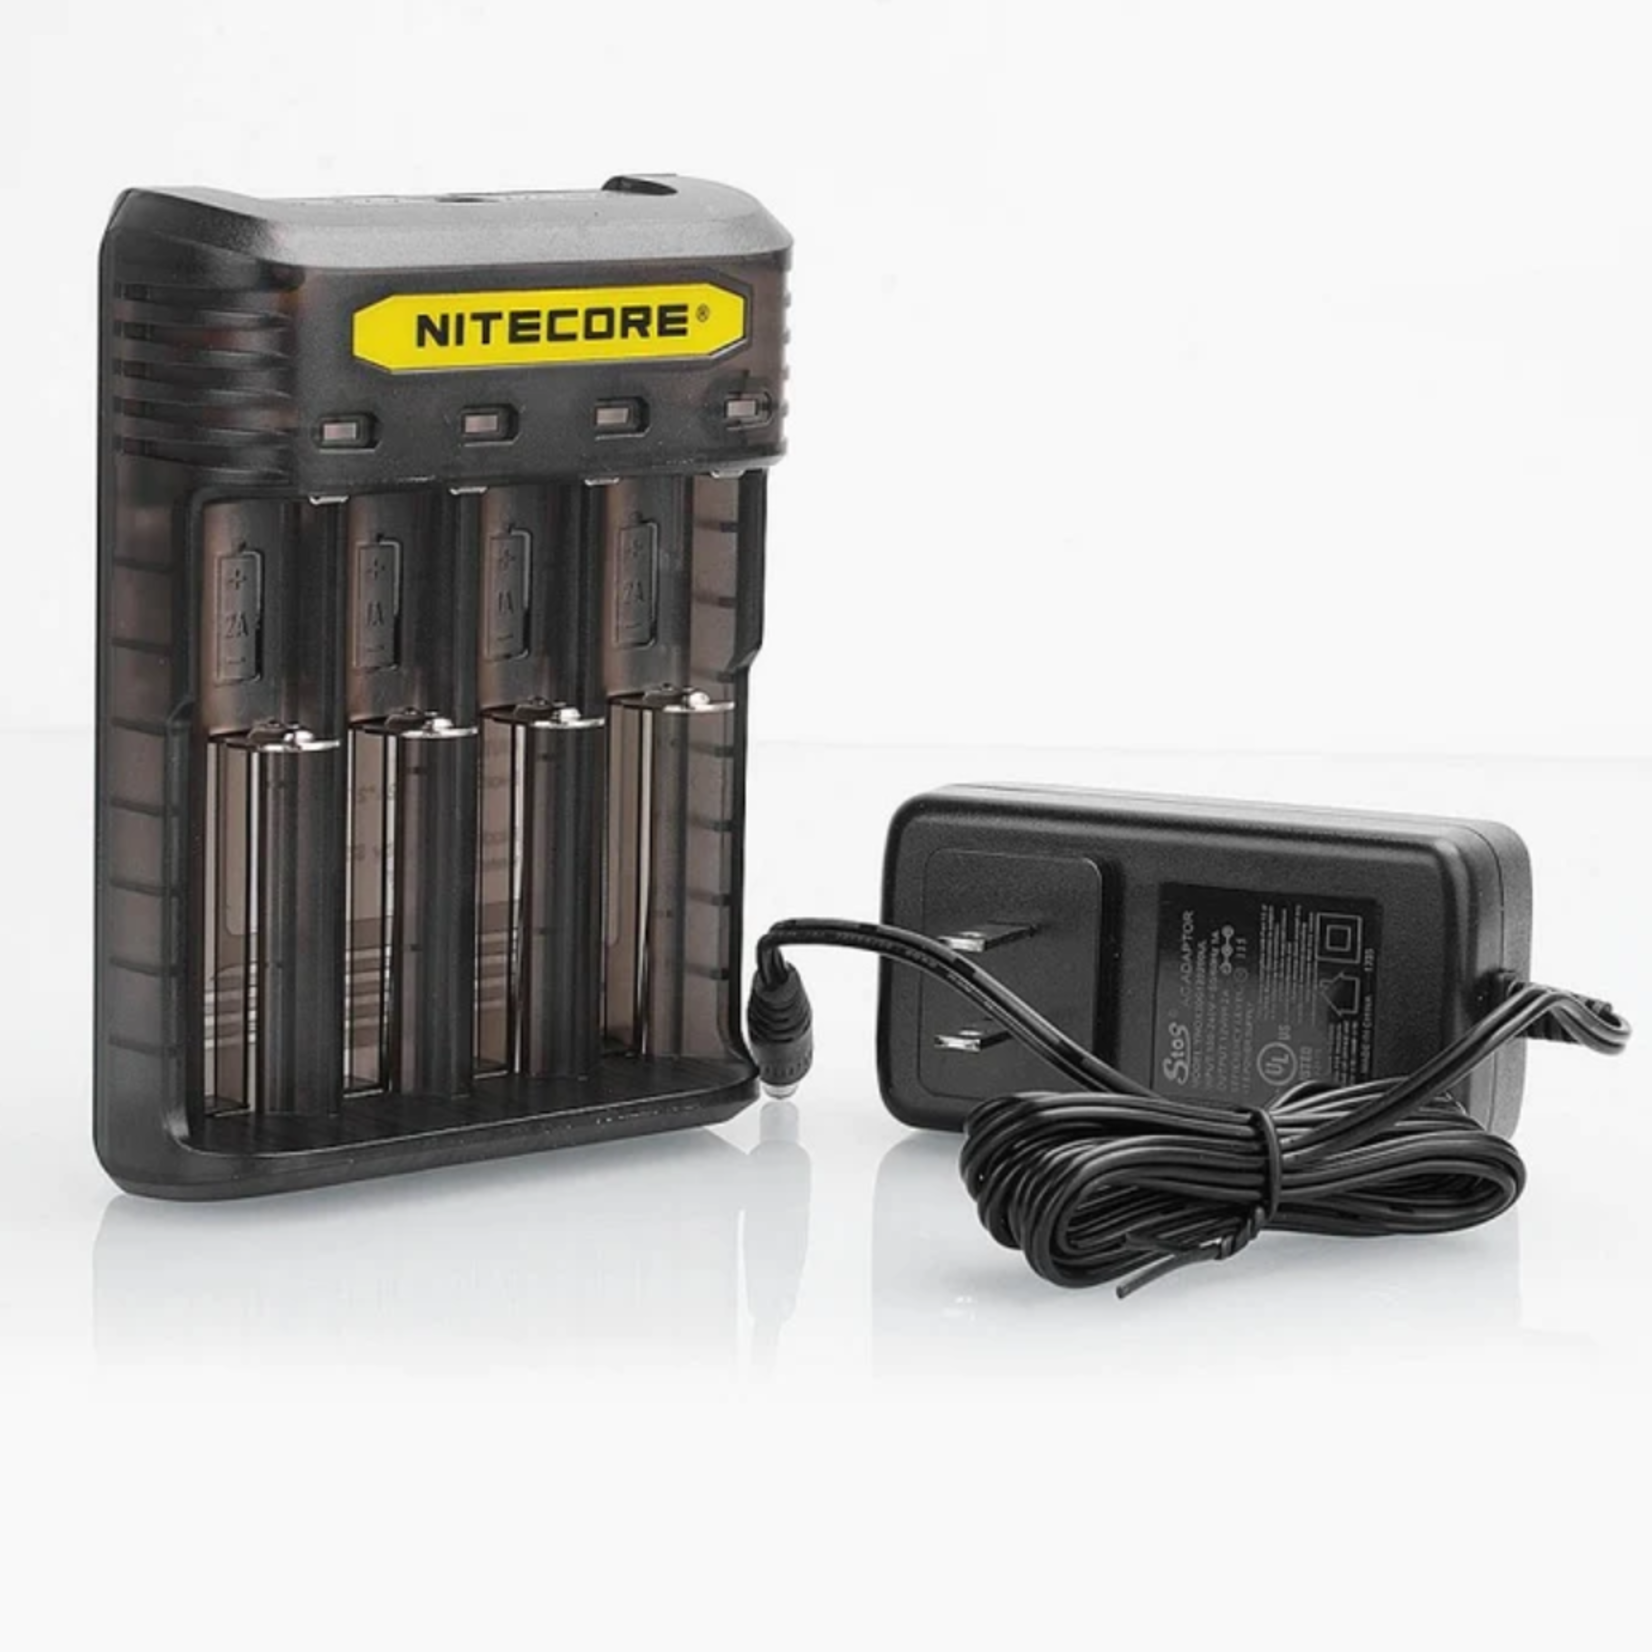 Nitecore Nitecore Q4 (Quad) Battery Charger